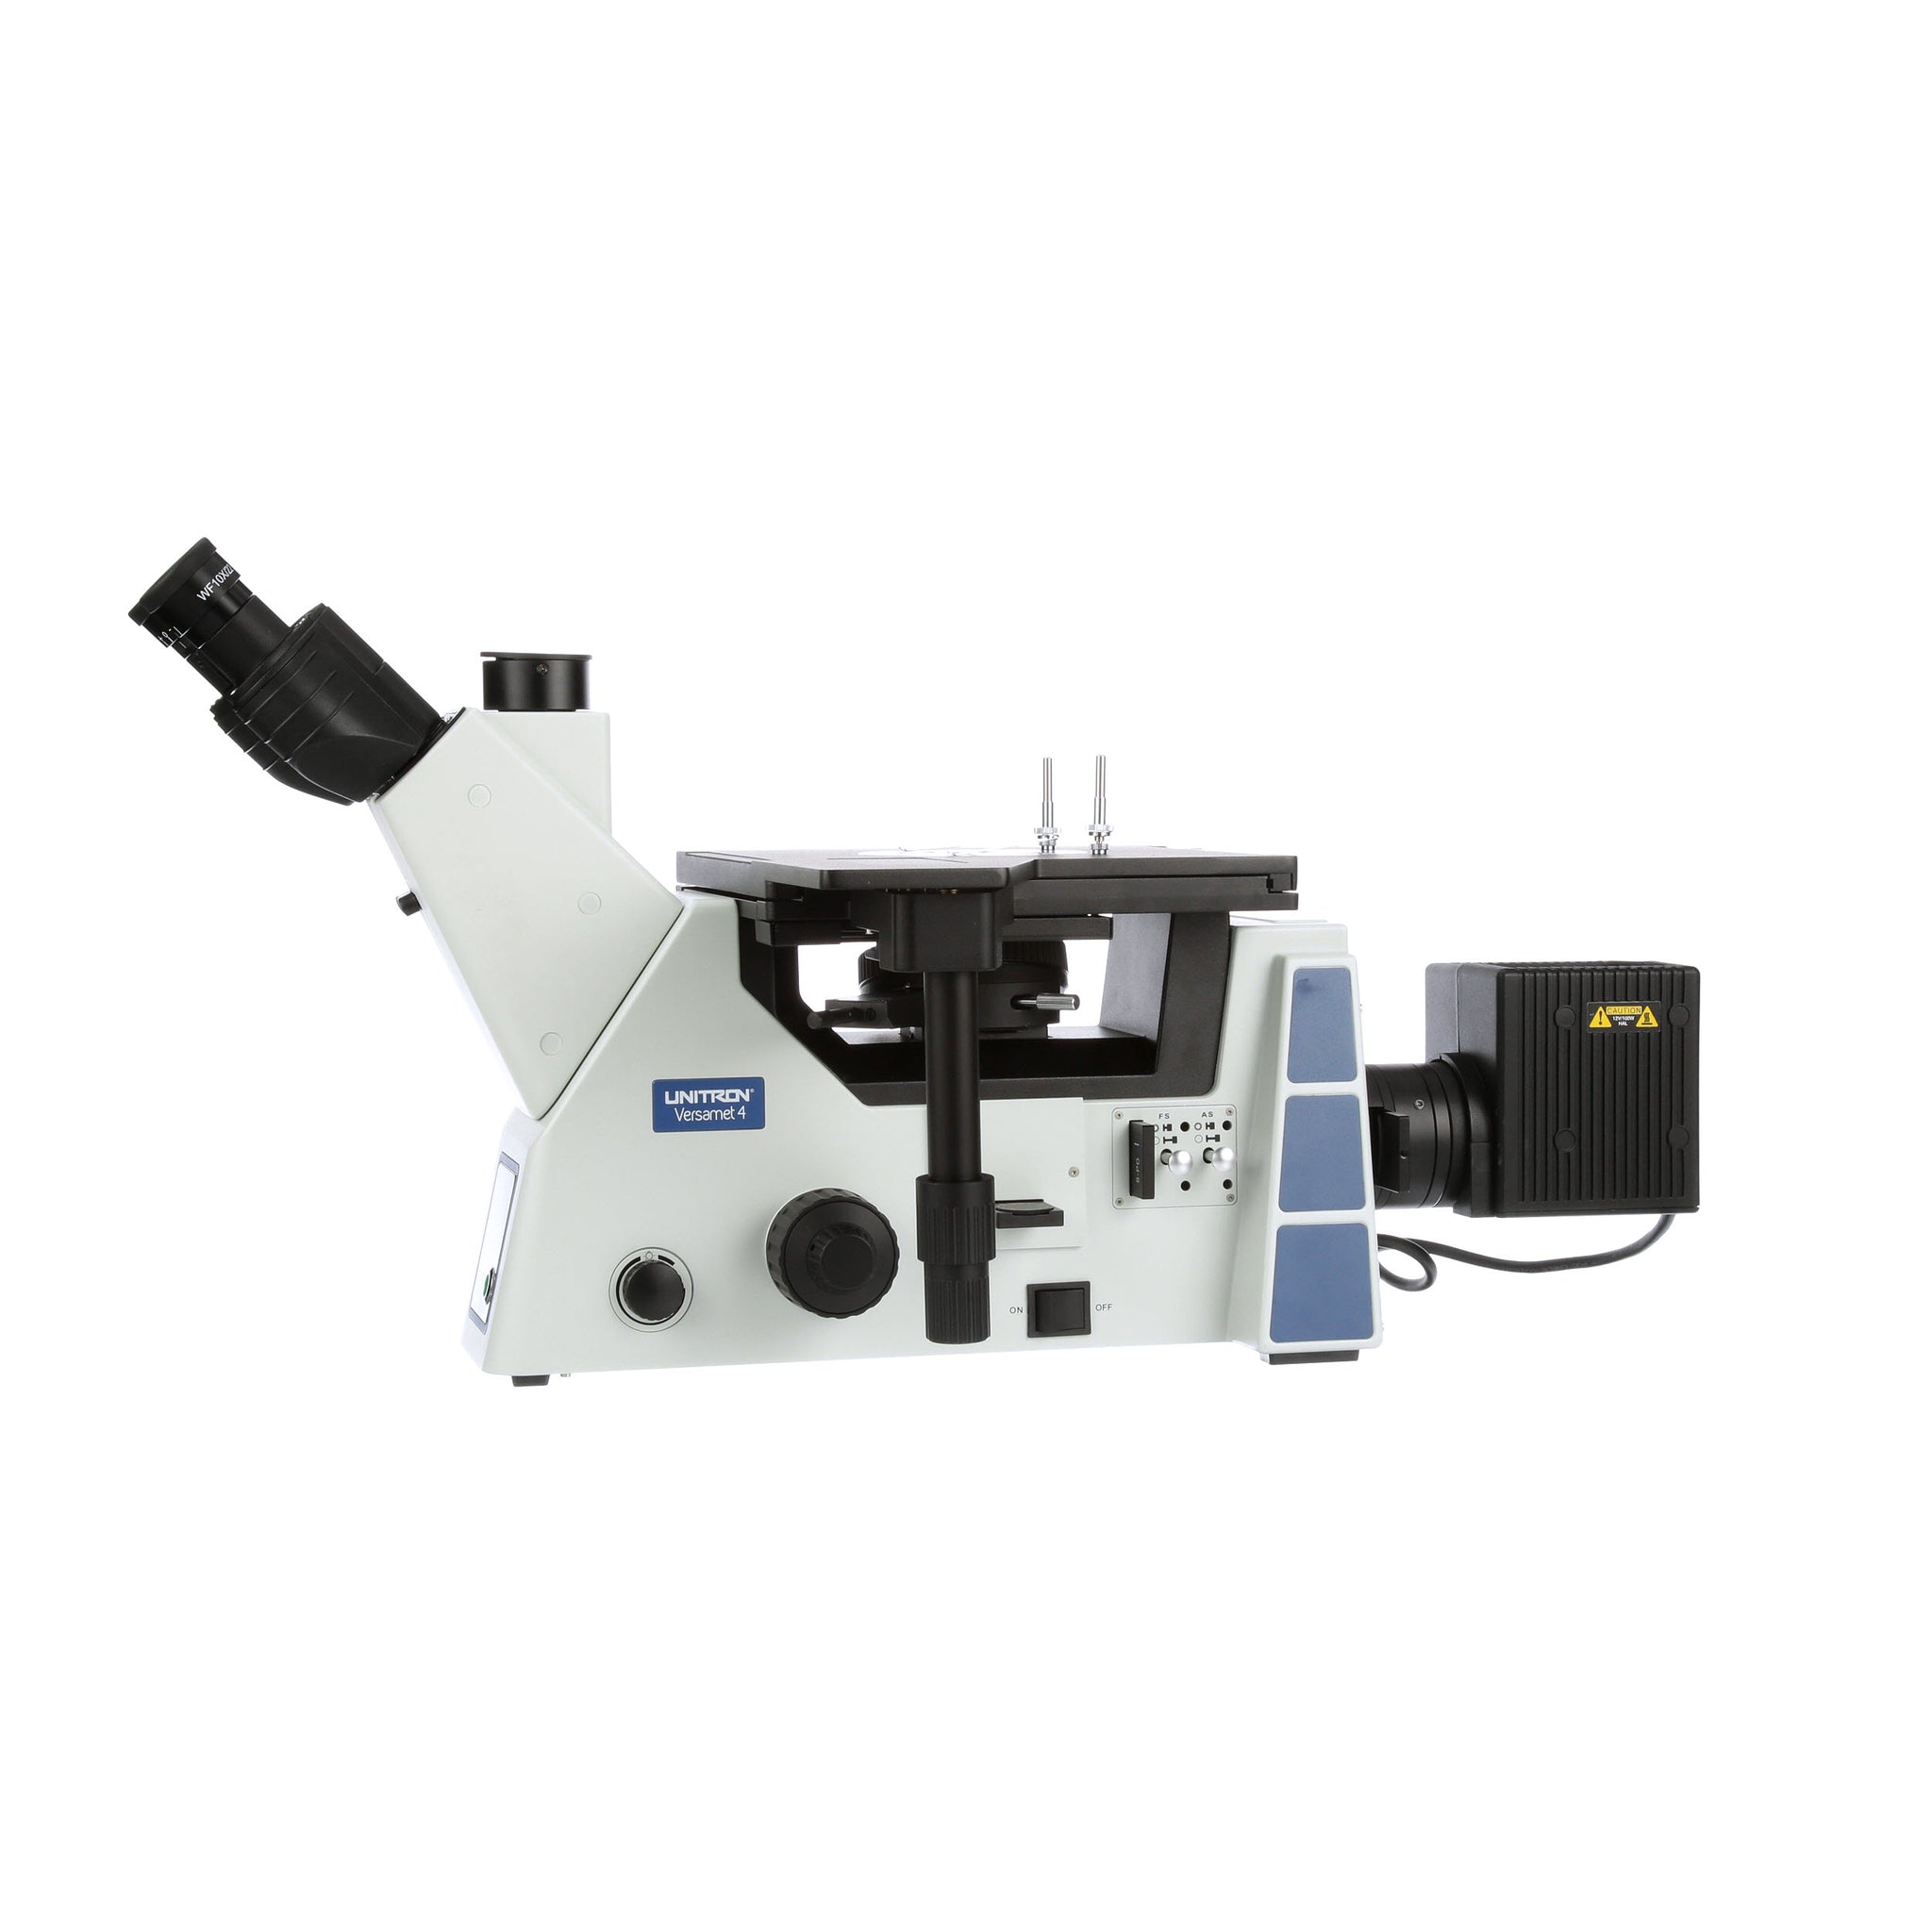 Unitron Versamet 4 Inverted Metallurgical Brightfield Microscope